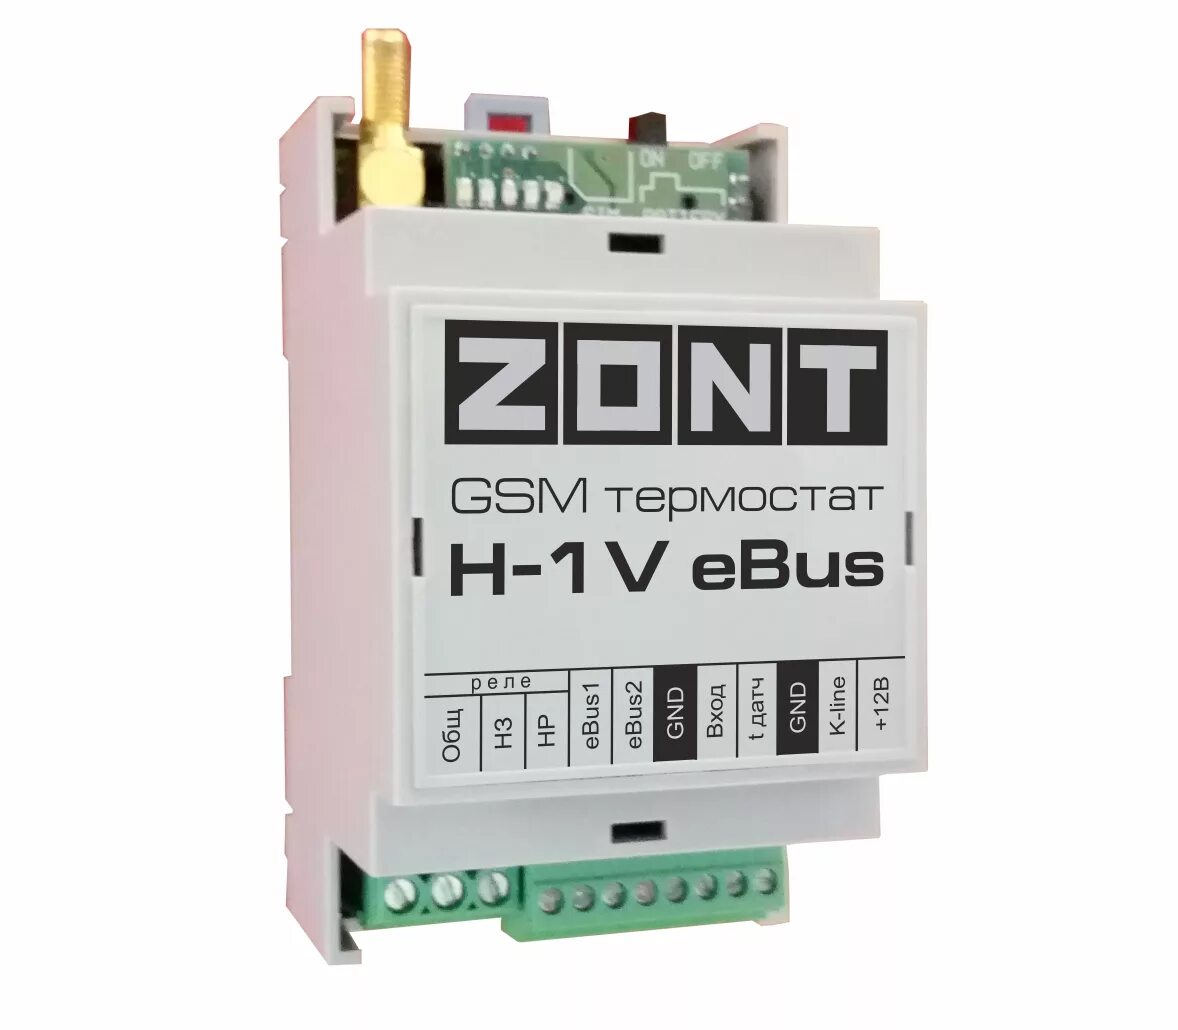 Zont-h1v EBUS GSM-термостат. Protherm блок дистанционного управления котлом GSM-climate Zont h-1v EBUS. GSM-термостат Zont h-1v. GSM-термостат Zont h-1. Zont v